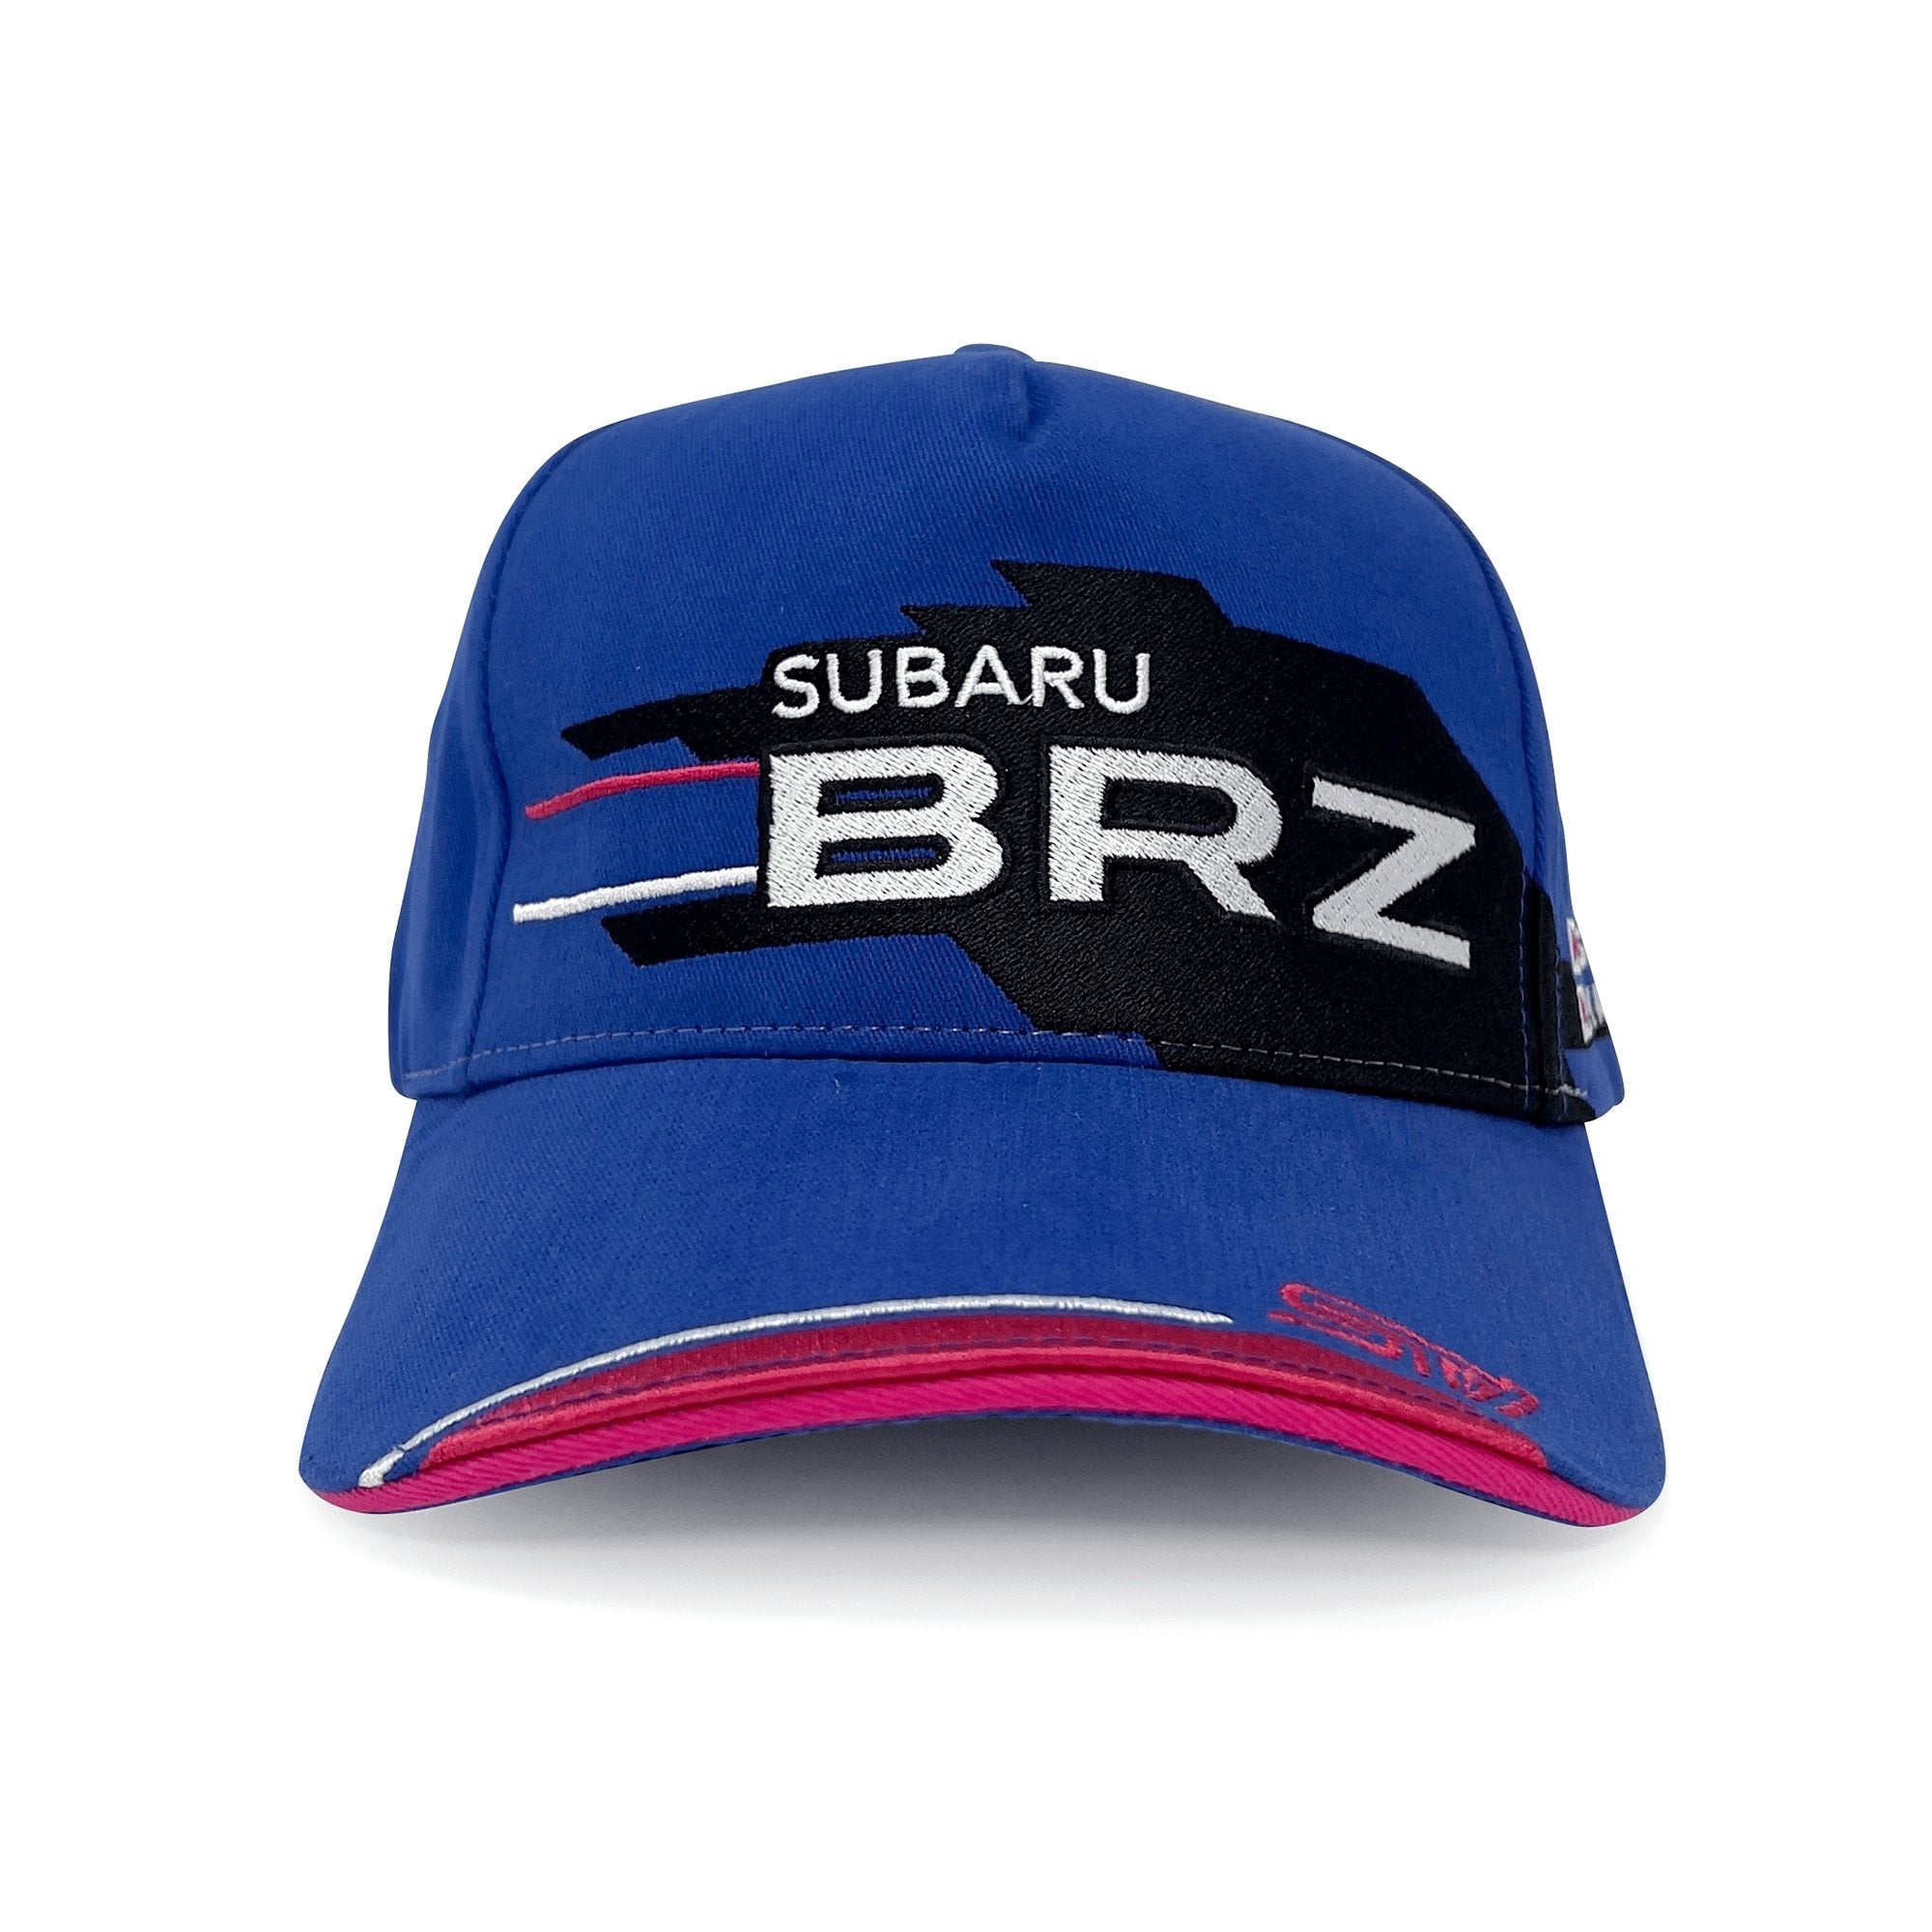 Japan Super JGTC GT300 Subaru BRZ STI Racing Champion Hat Cap